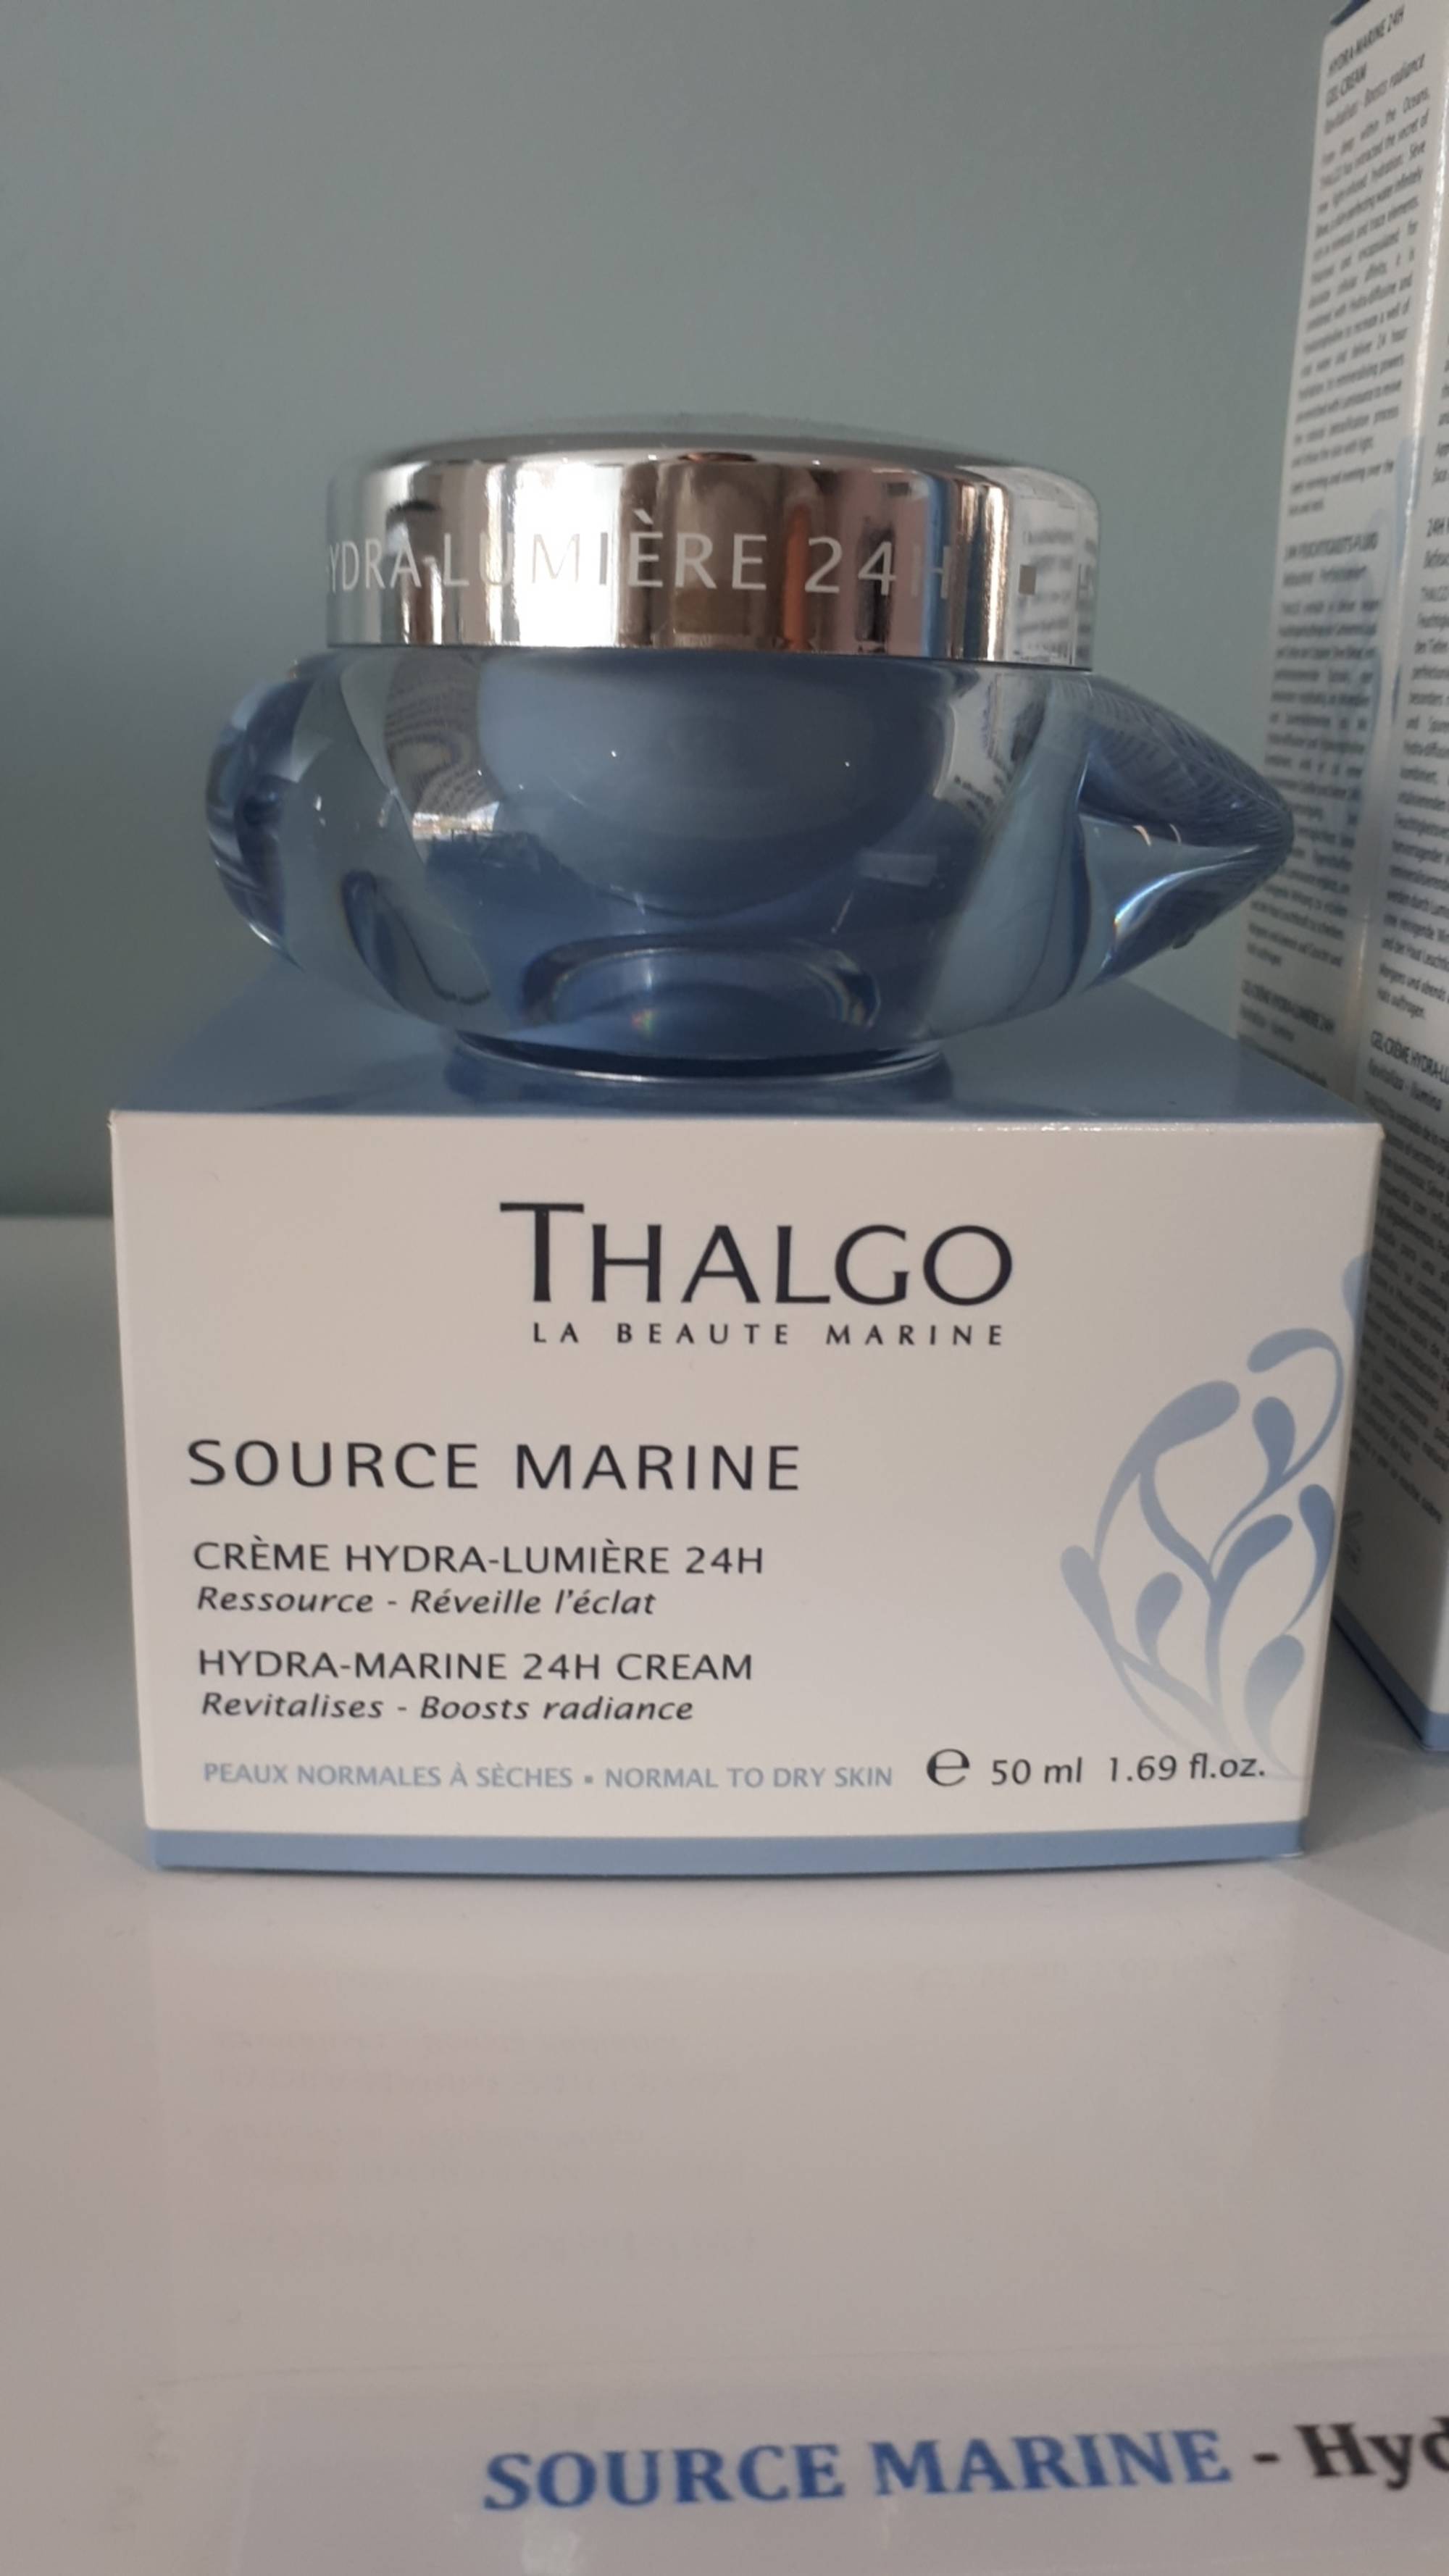 THALGO - Source marine - Crème hydra-lumière 24h